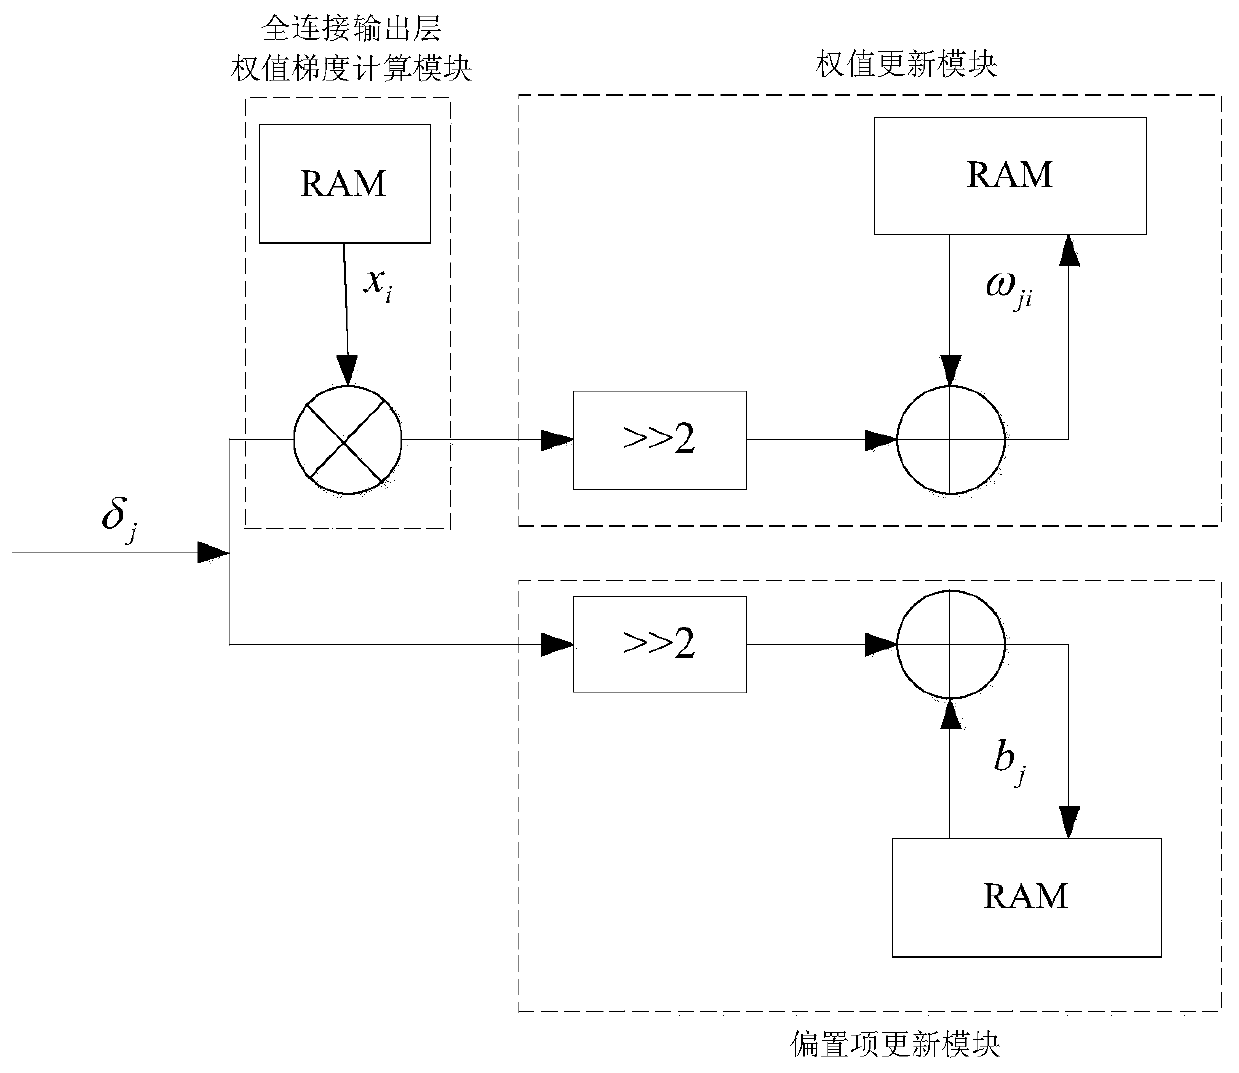 Hardware acceleration implementation architecture for backward training of convolutional neural network based on FPGA